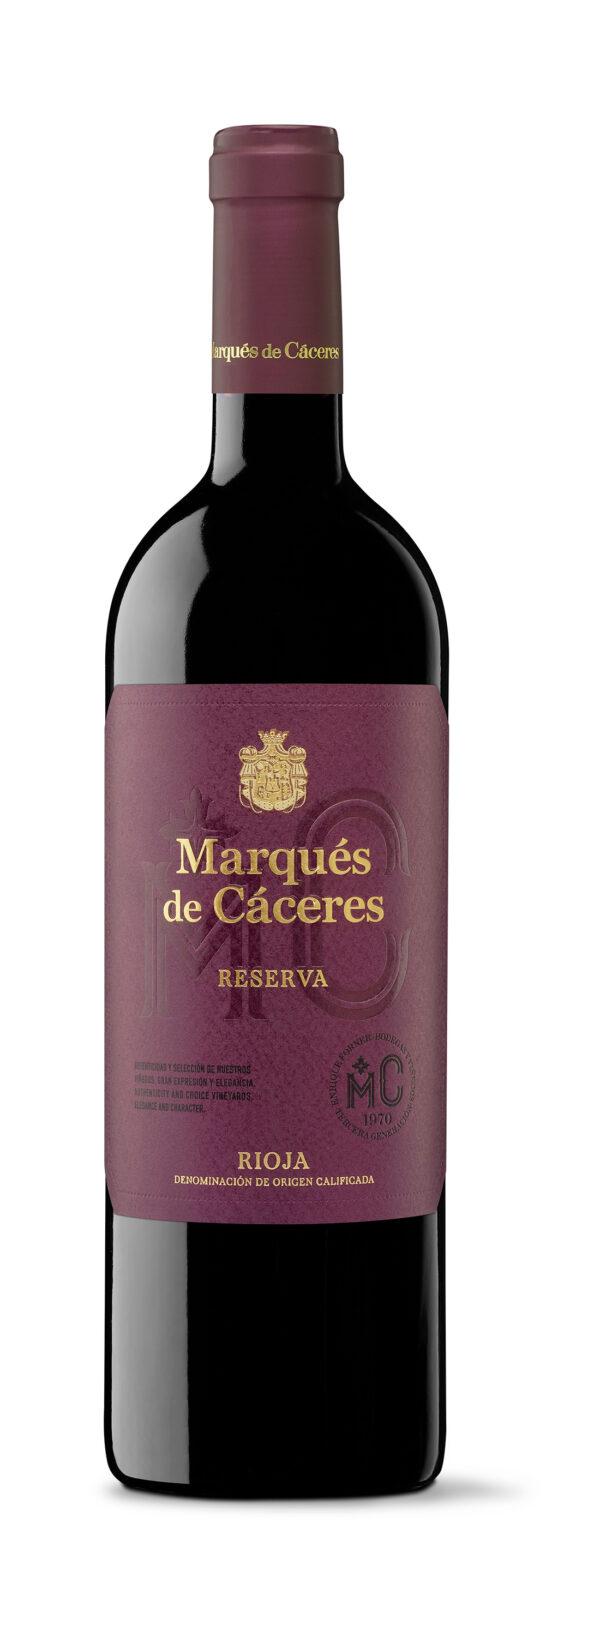 Marques de Caceres 2015 Rioja Reserva, Spain. (Courtesy of Marques de Caceres)